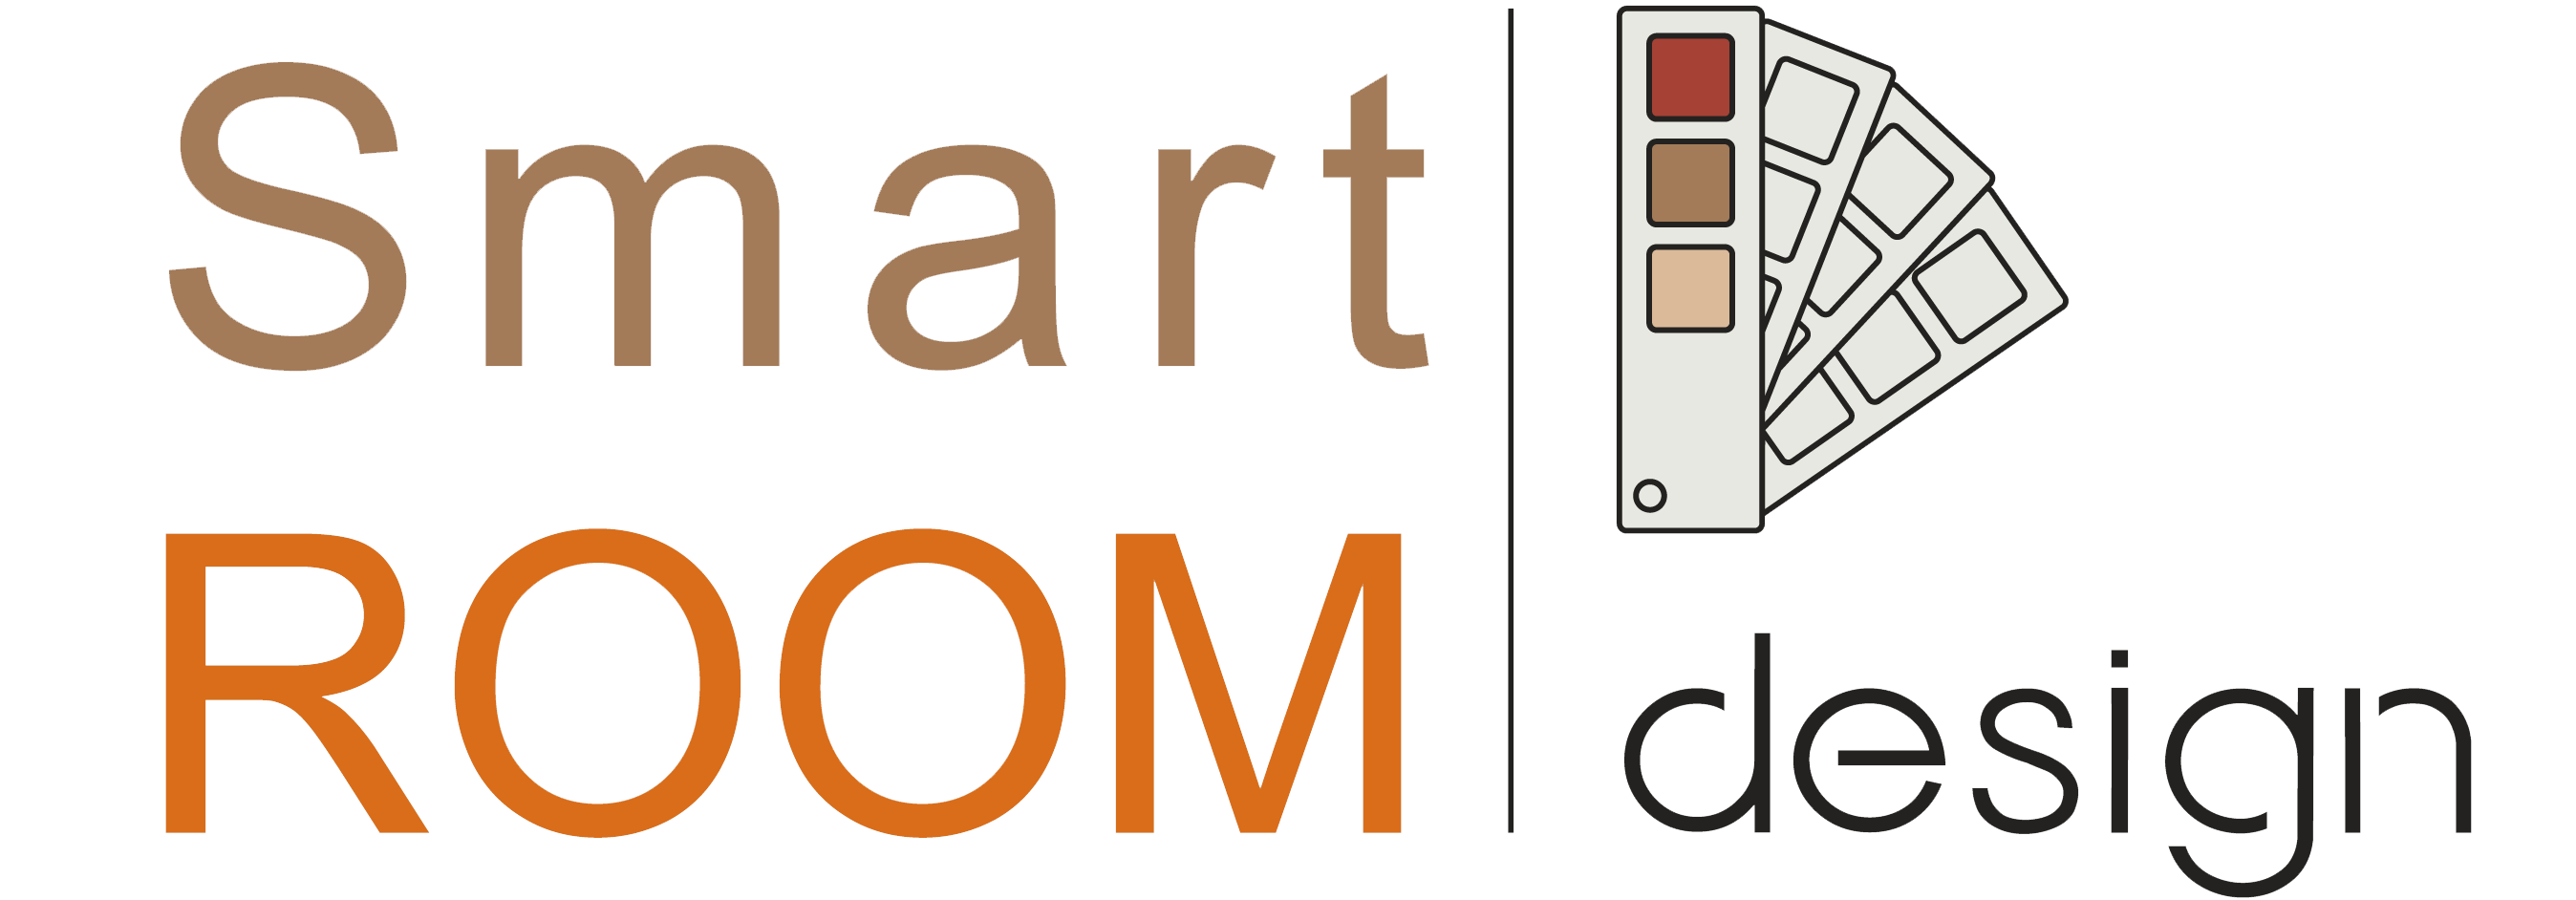 SmartRoom Логотип(logo)